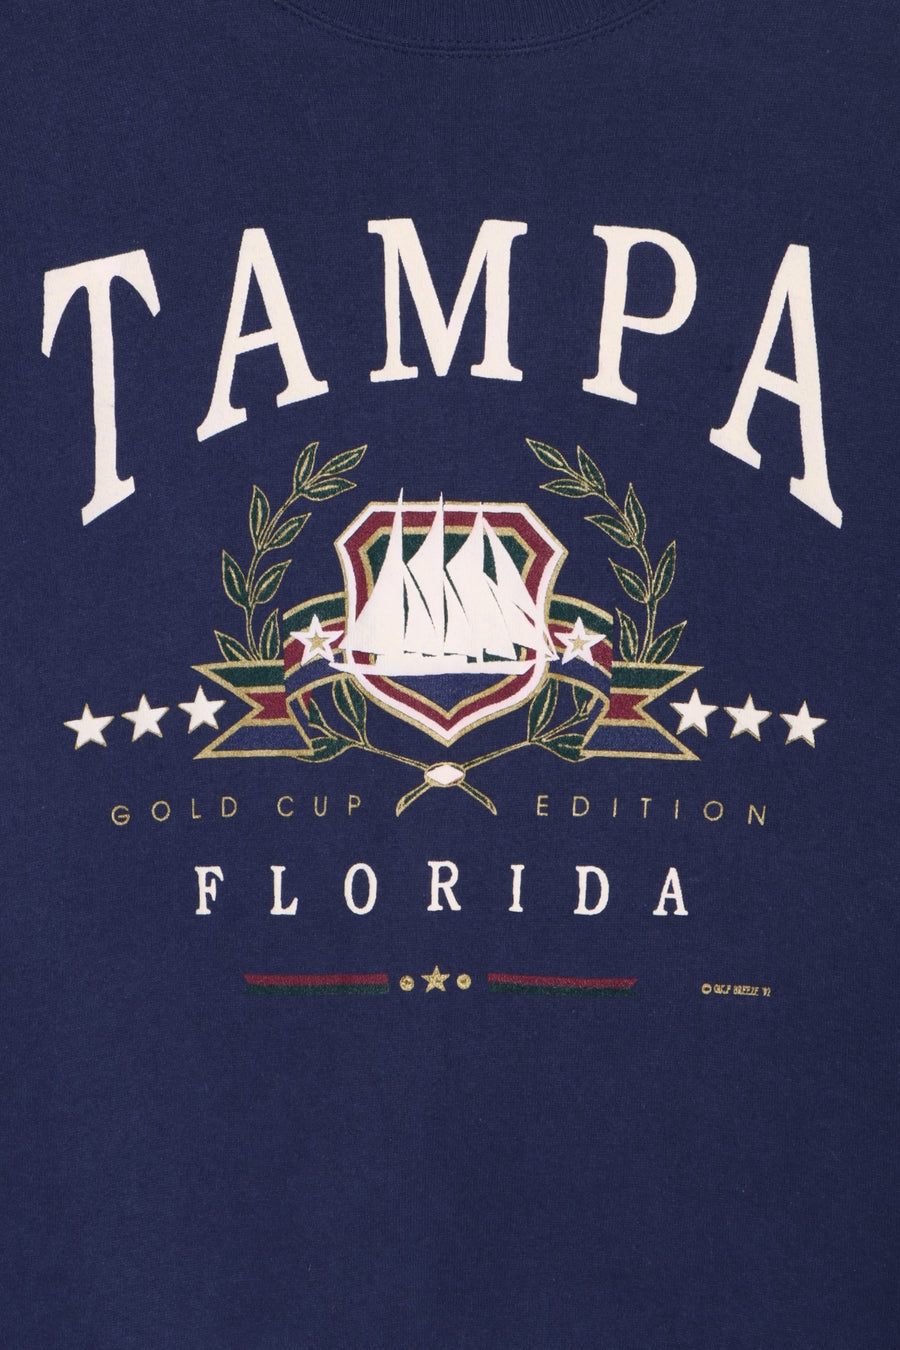 Tampa Florida 1992 Sailboat Puffy Print Sweatshirt (L)